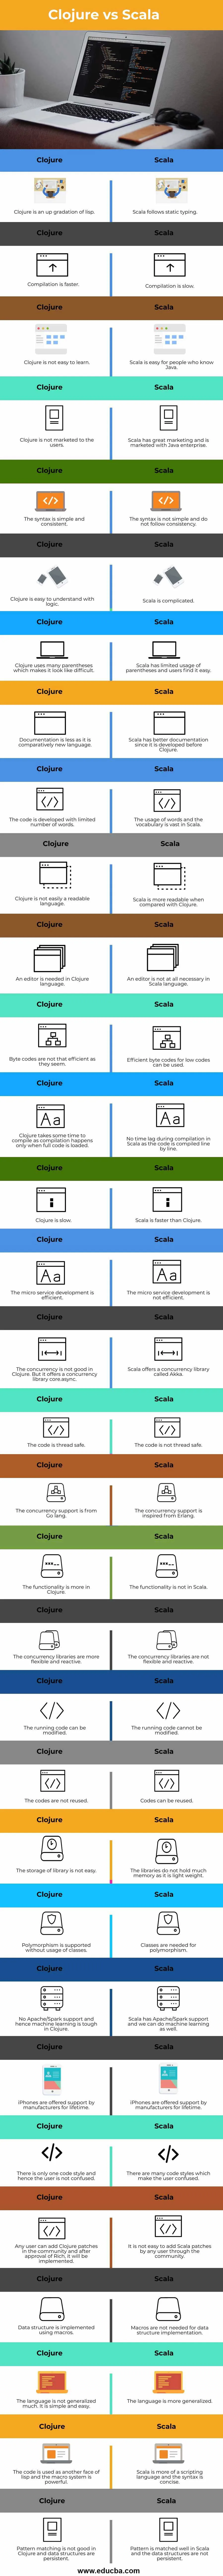 Clojure-vs-Scala-info